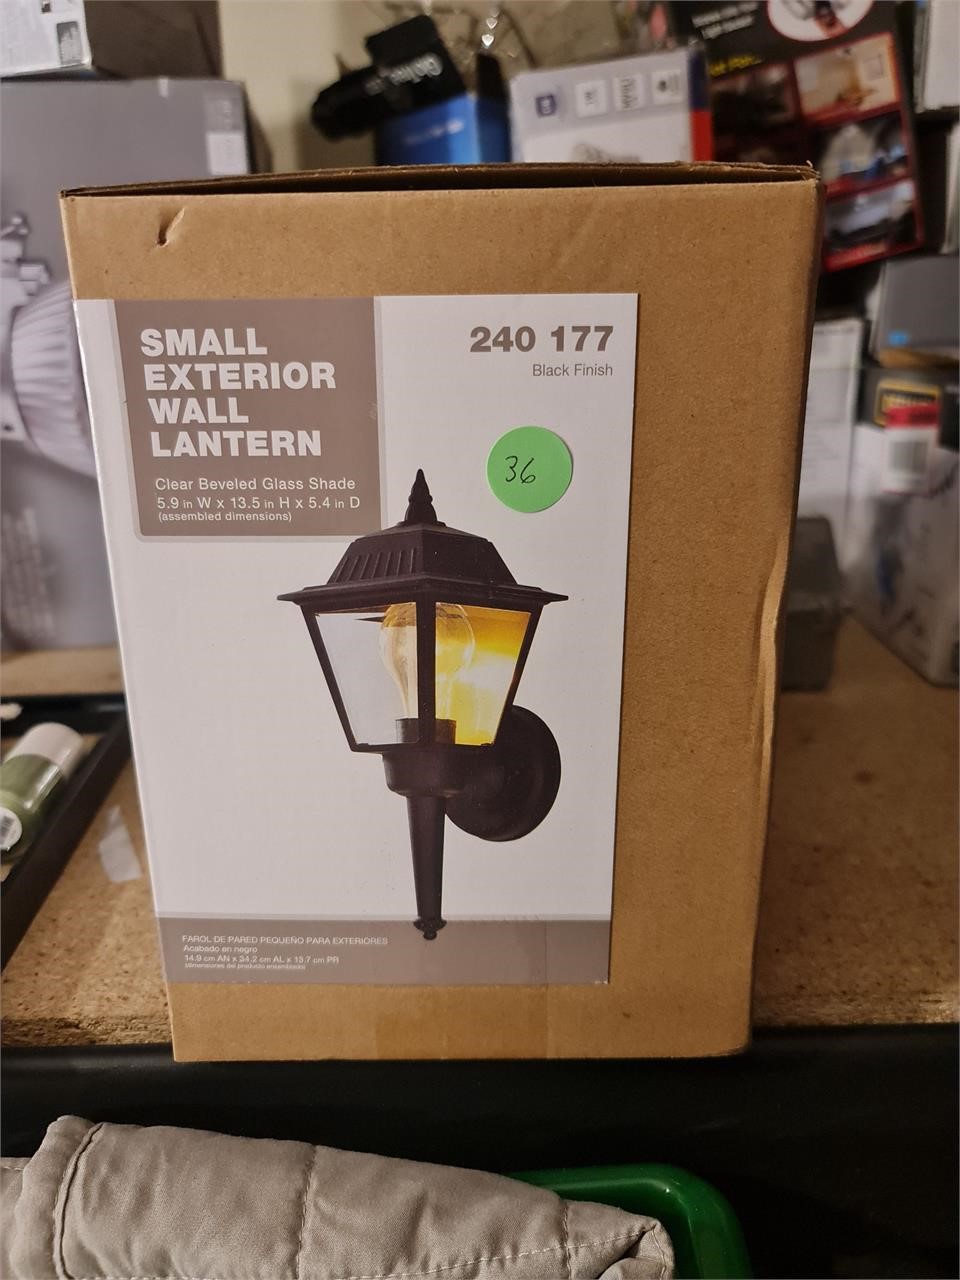 Small exterior wall lantern